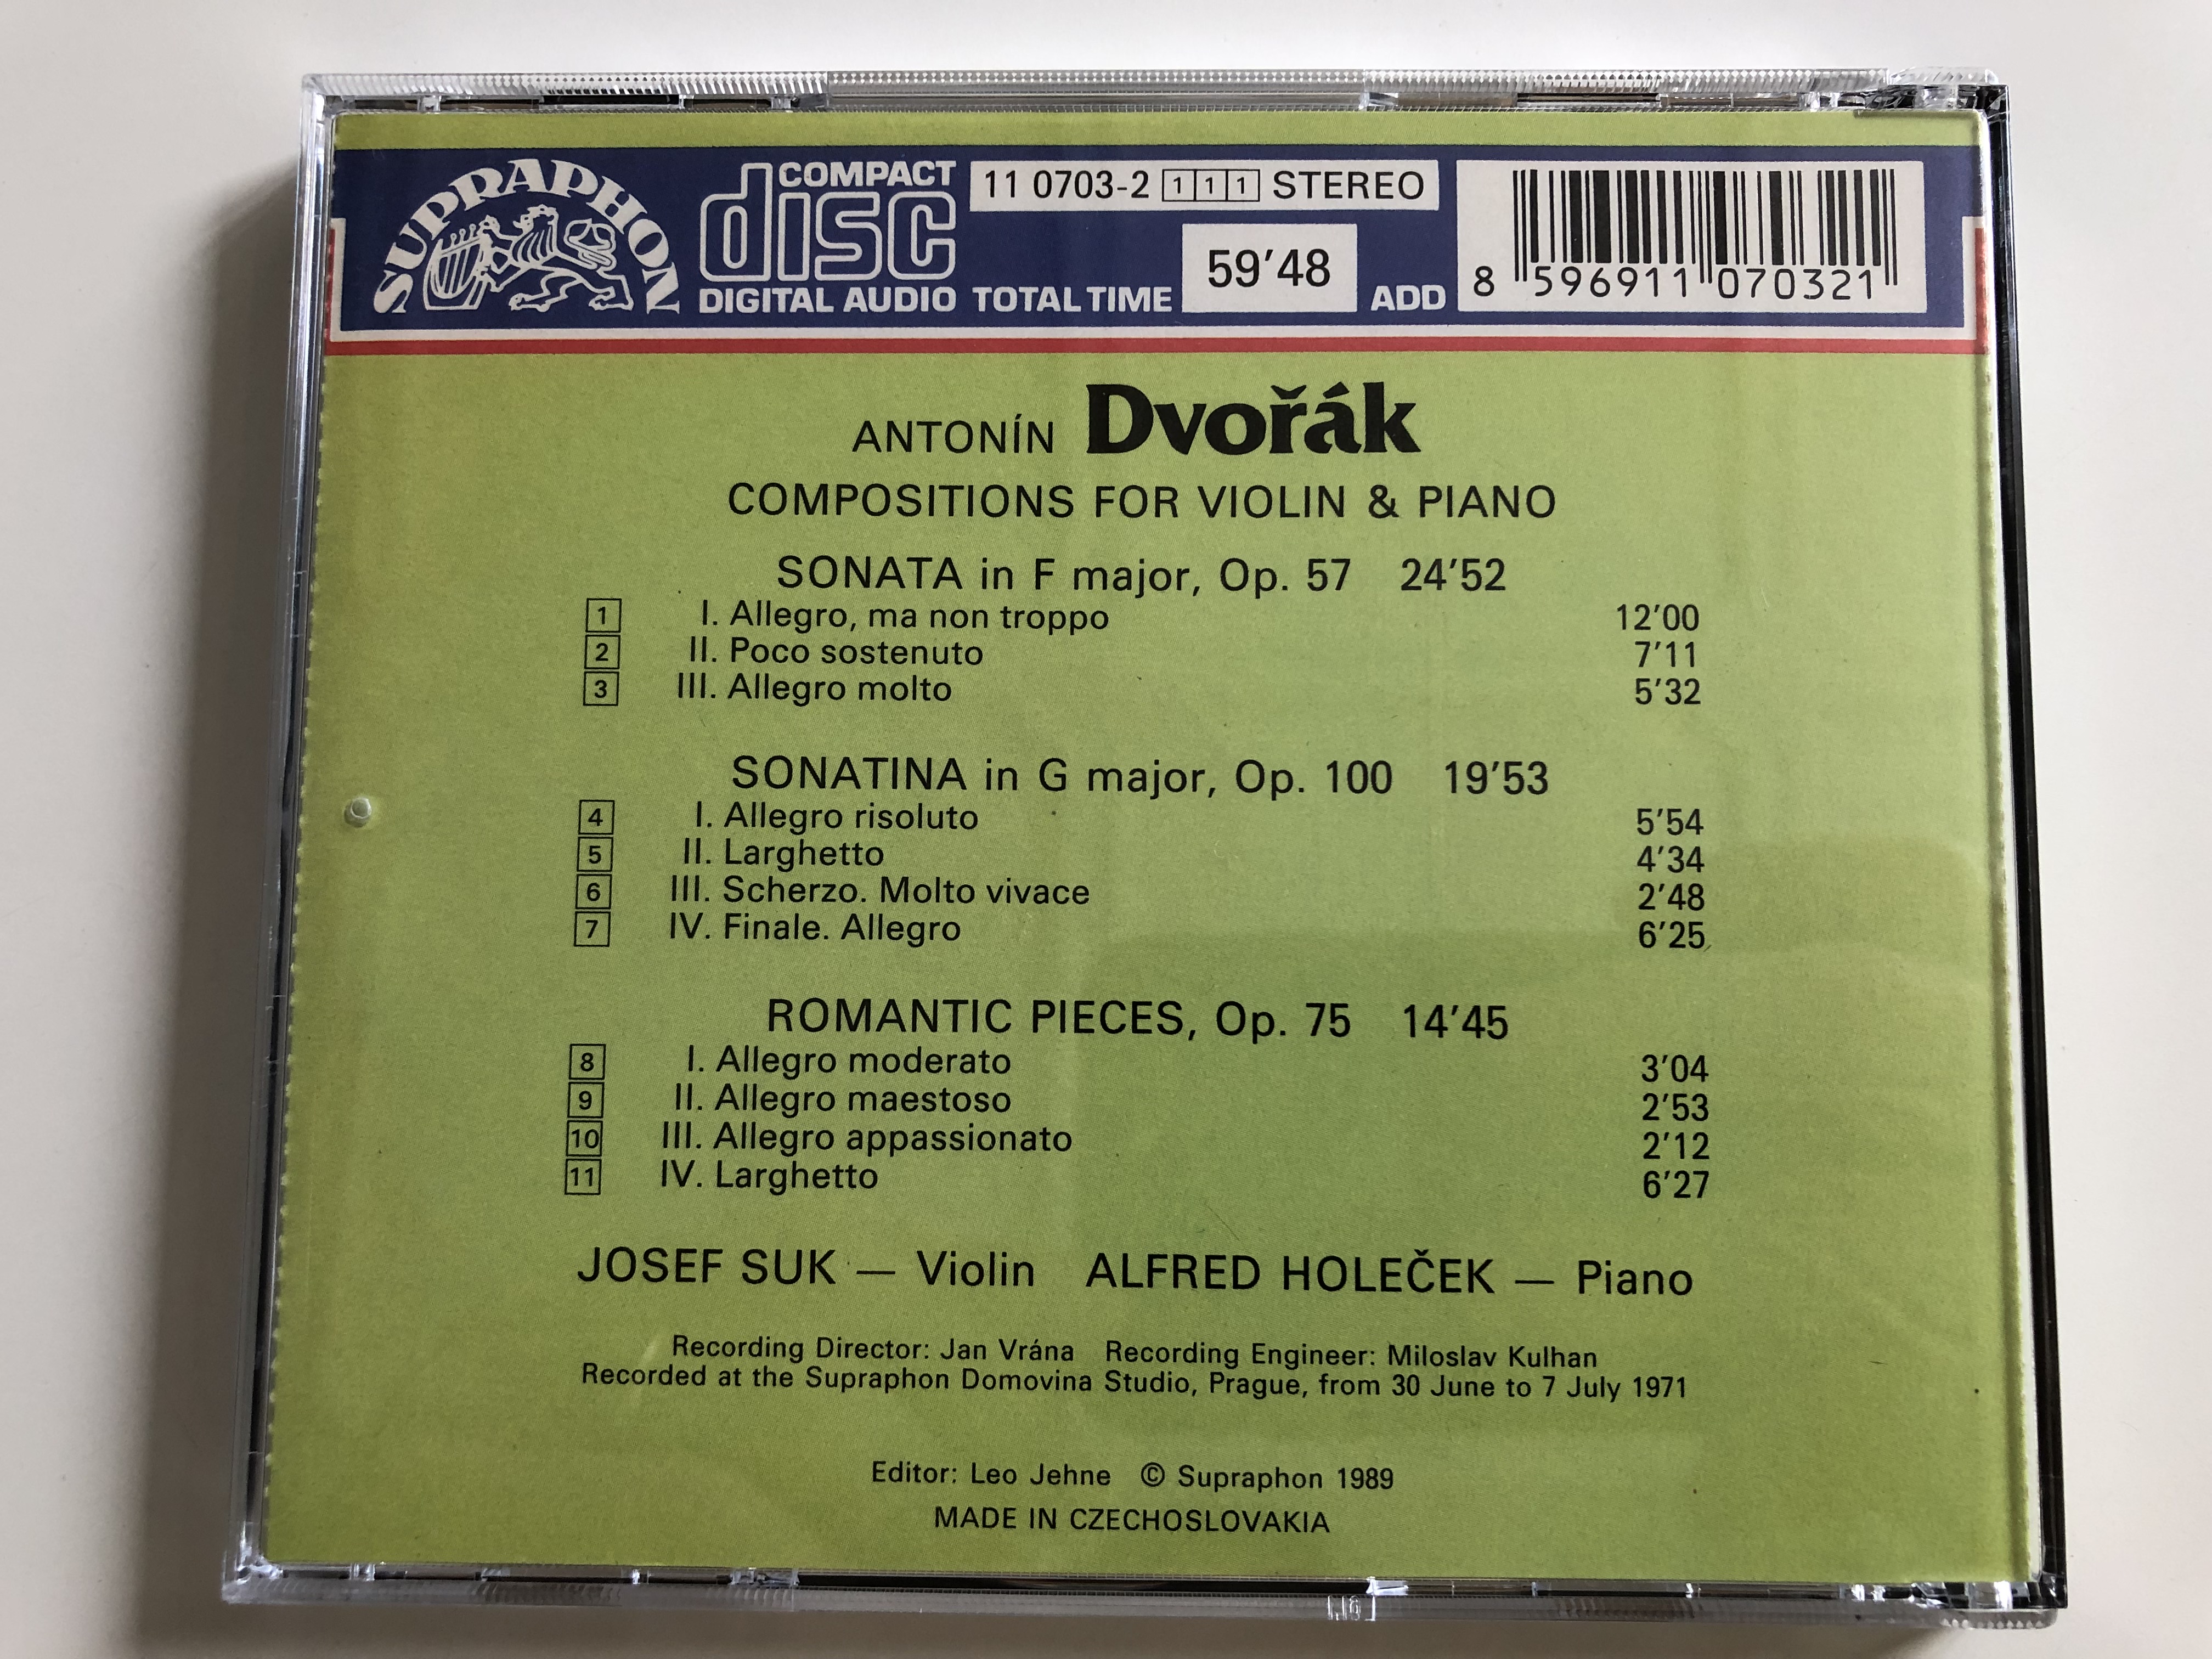 josef-suk-treasury-dvor-k-sonata-sonatina-romantic-pieces-josef-suk-violin-alfred-hole-ek-piano-supraphon-audio-cd-1989-7-.jpg